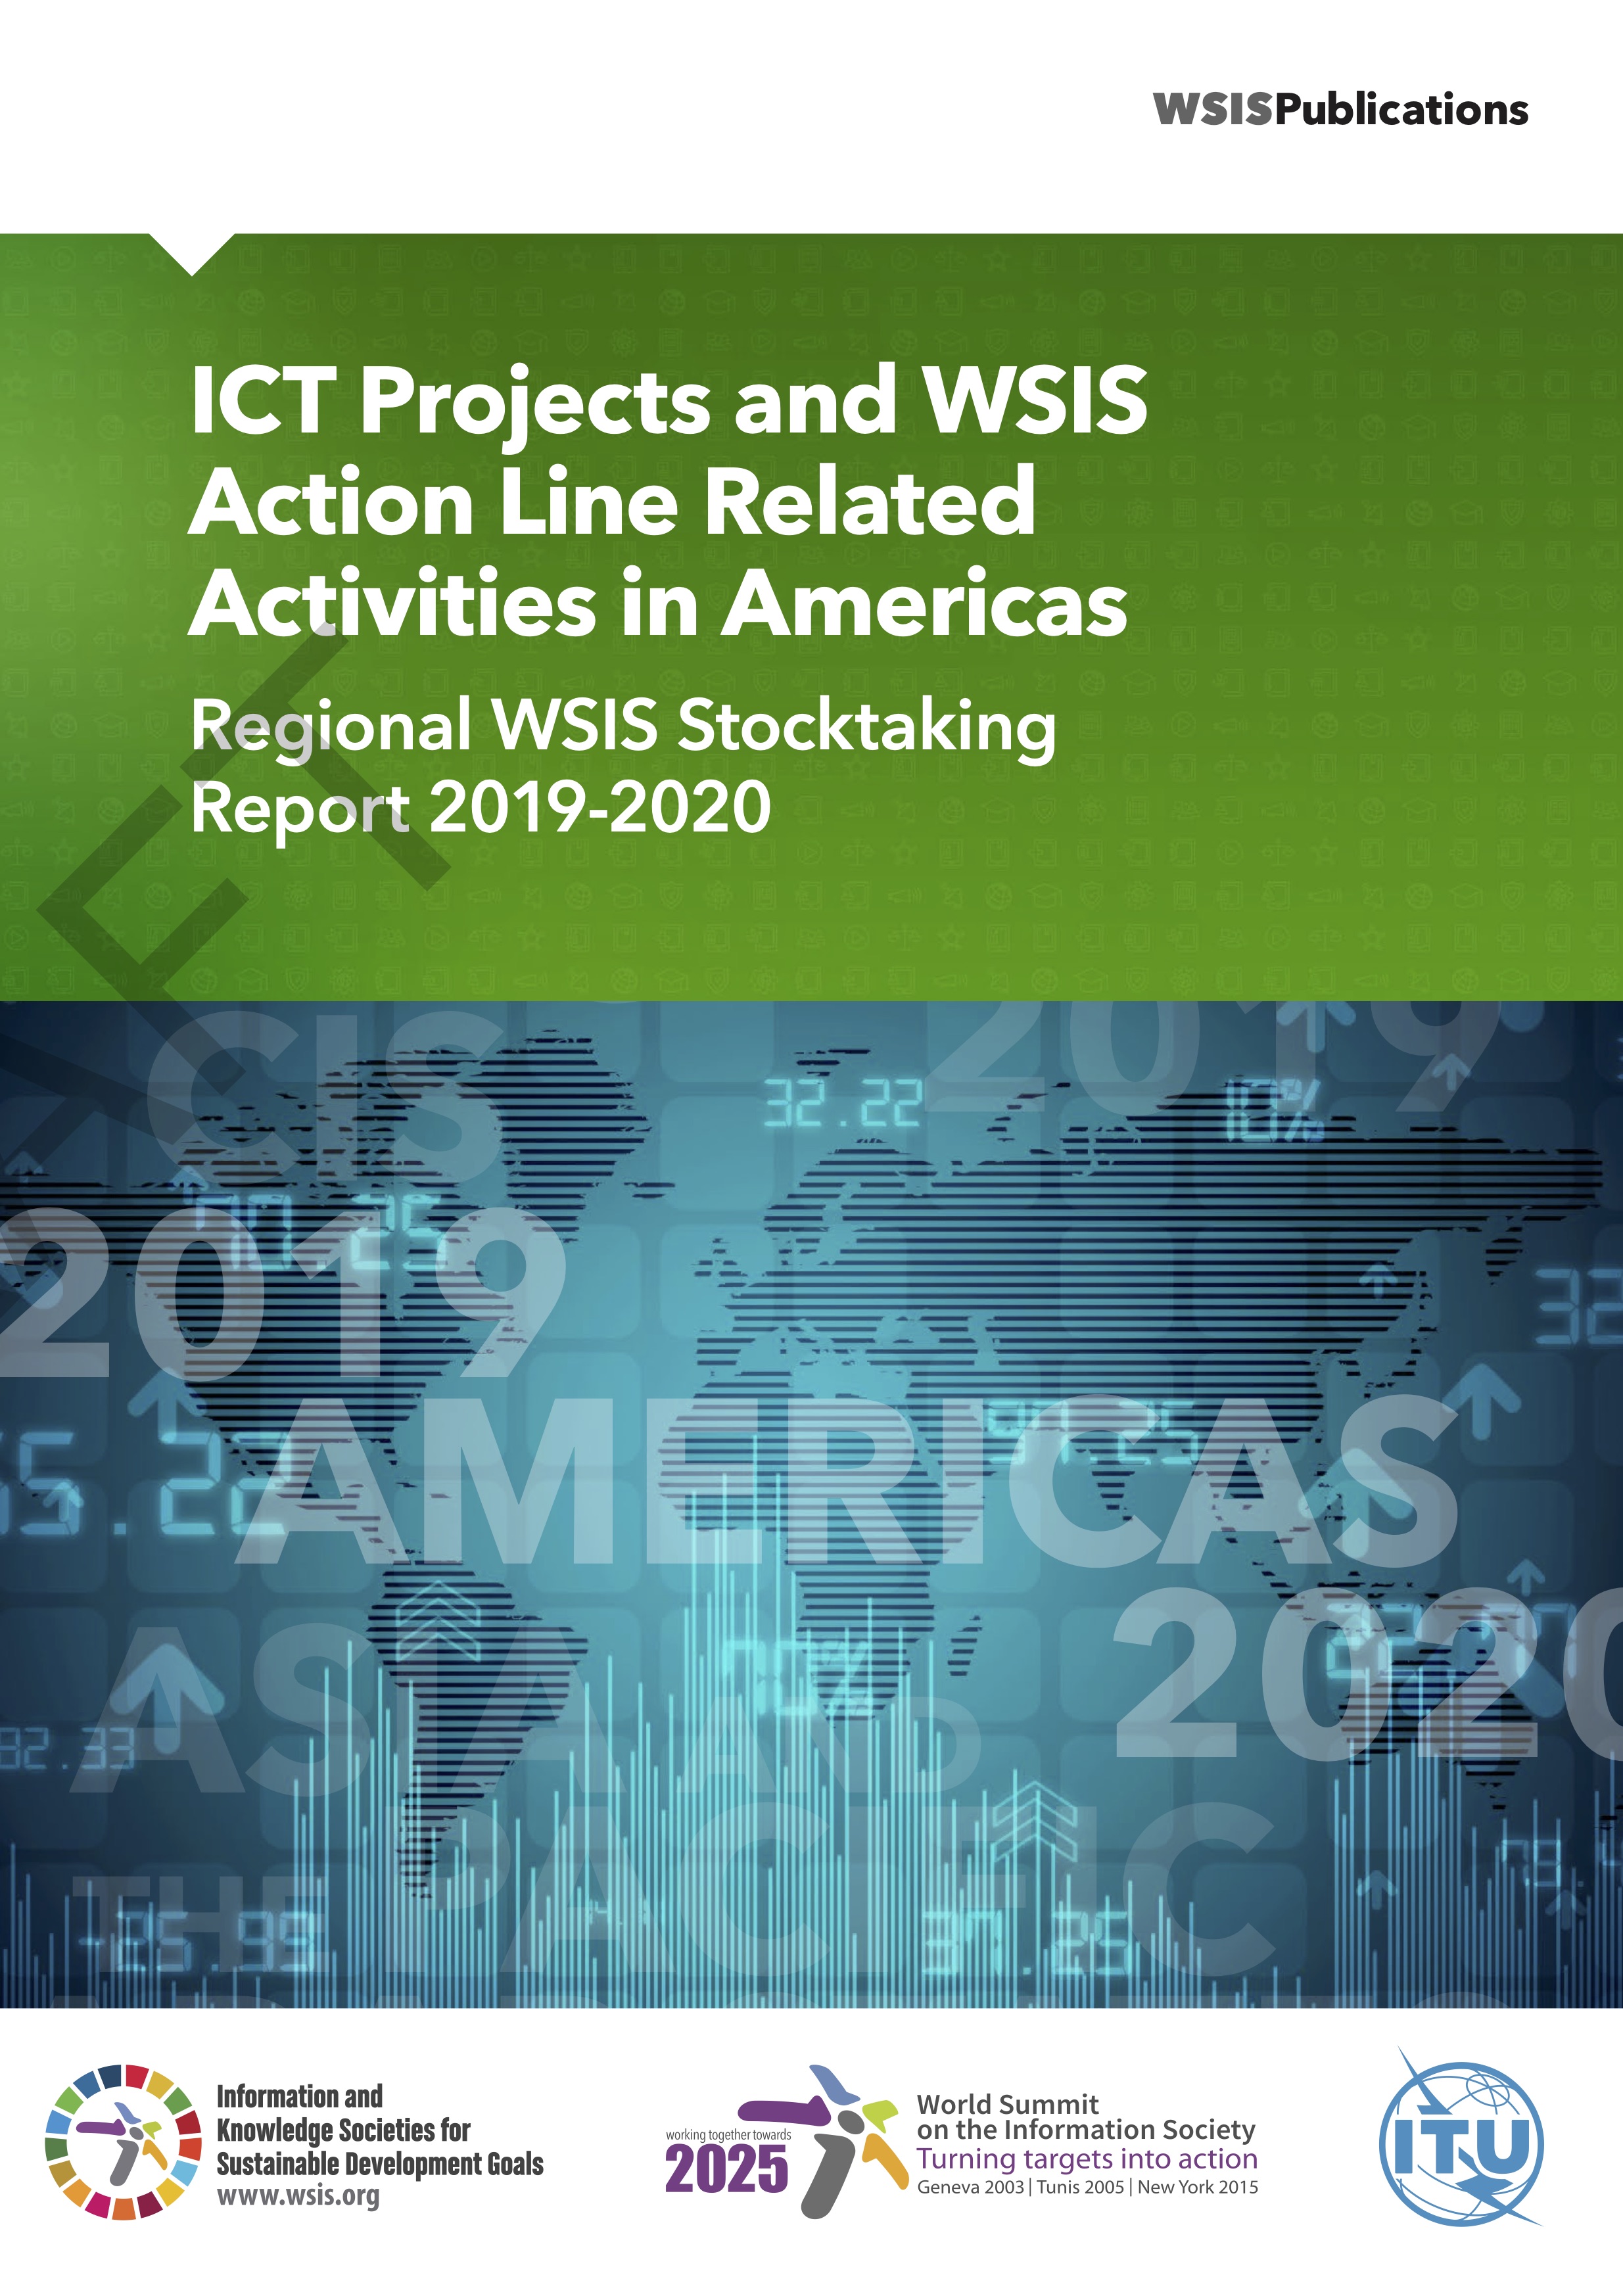 Regional WSIS Stocktaking Report 2019-2020 — Americas